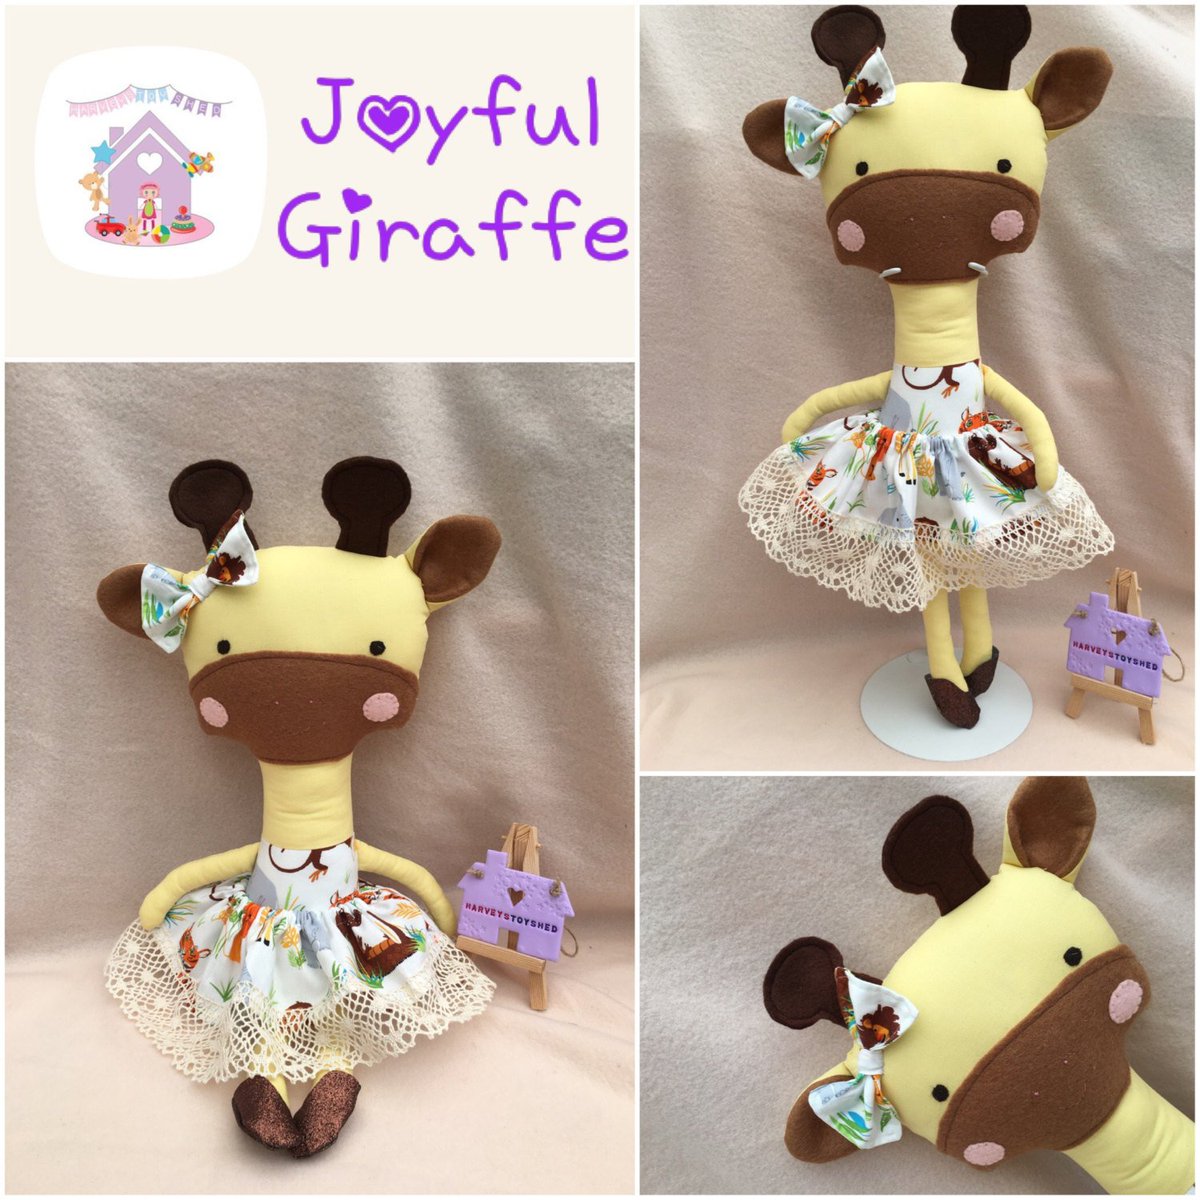 Joyful Giraffe Doll Animal Soft Toy with Outfit Handmade to Order tuppu.net/c8a83a20 #HarveysToyShed #Etsy #ChildsGift